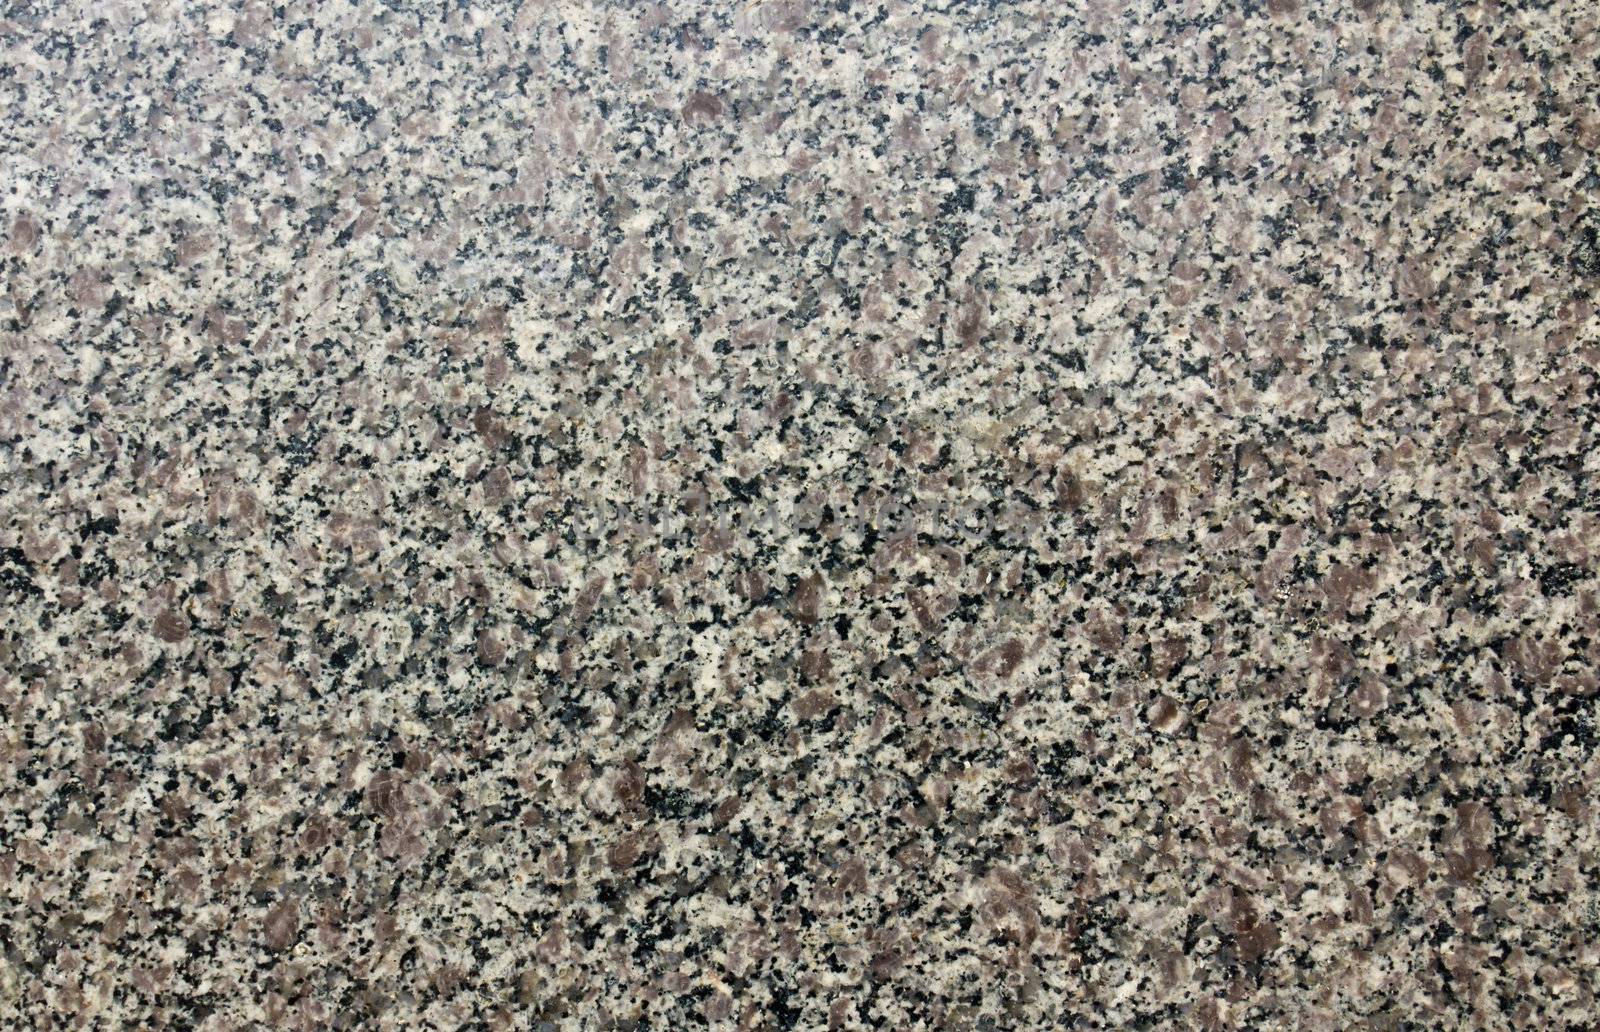  Granite marble surface  by stoonn